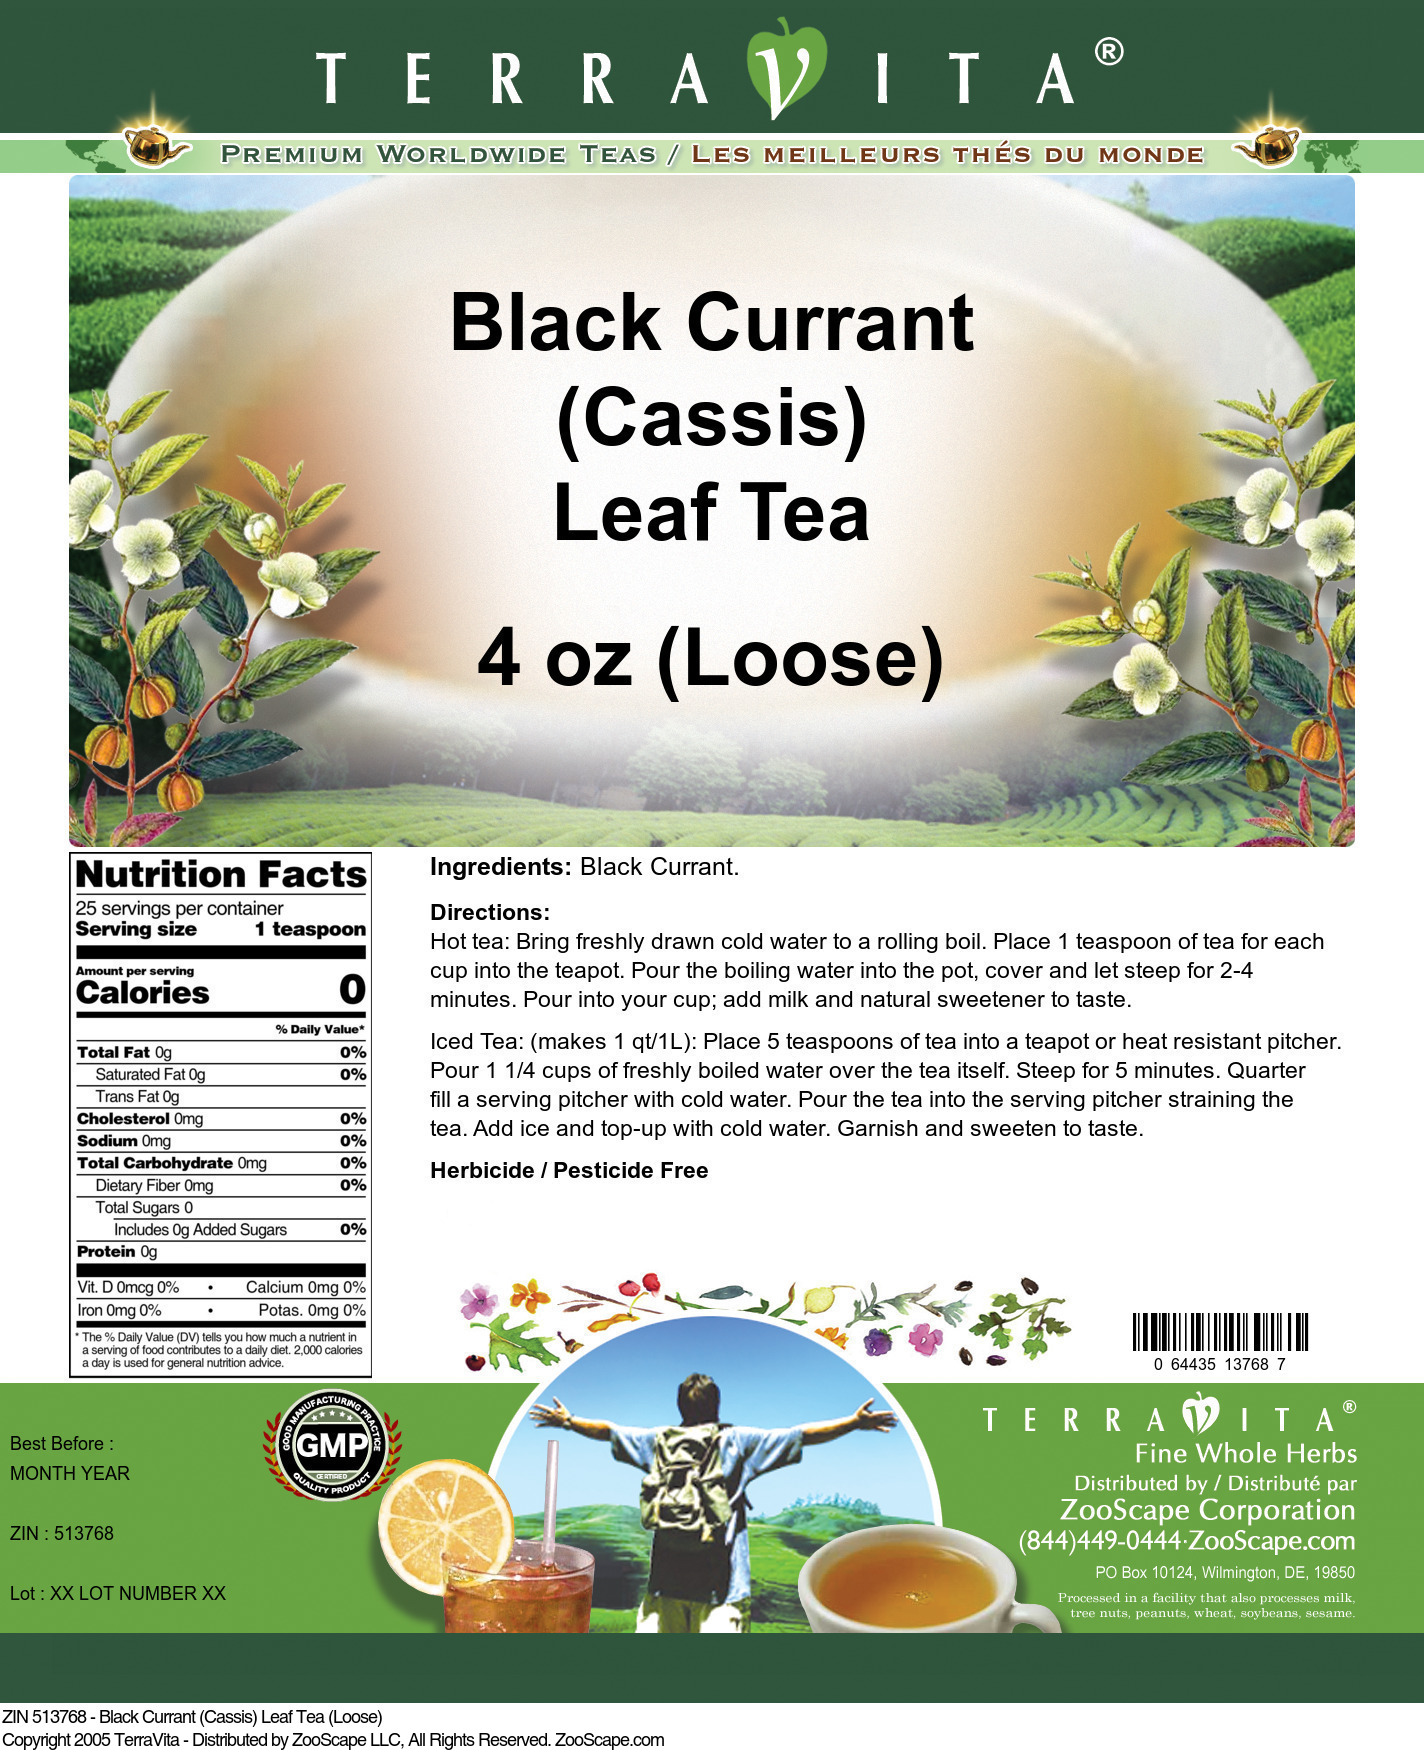 Black Currant (Cassis) Leaf Tea (Loose) - Label